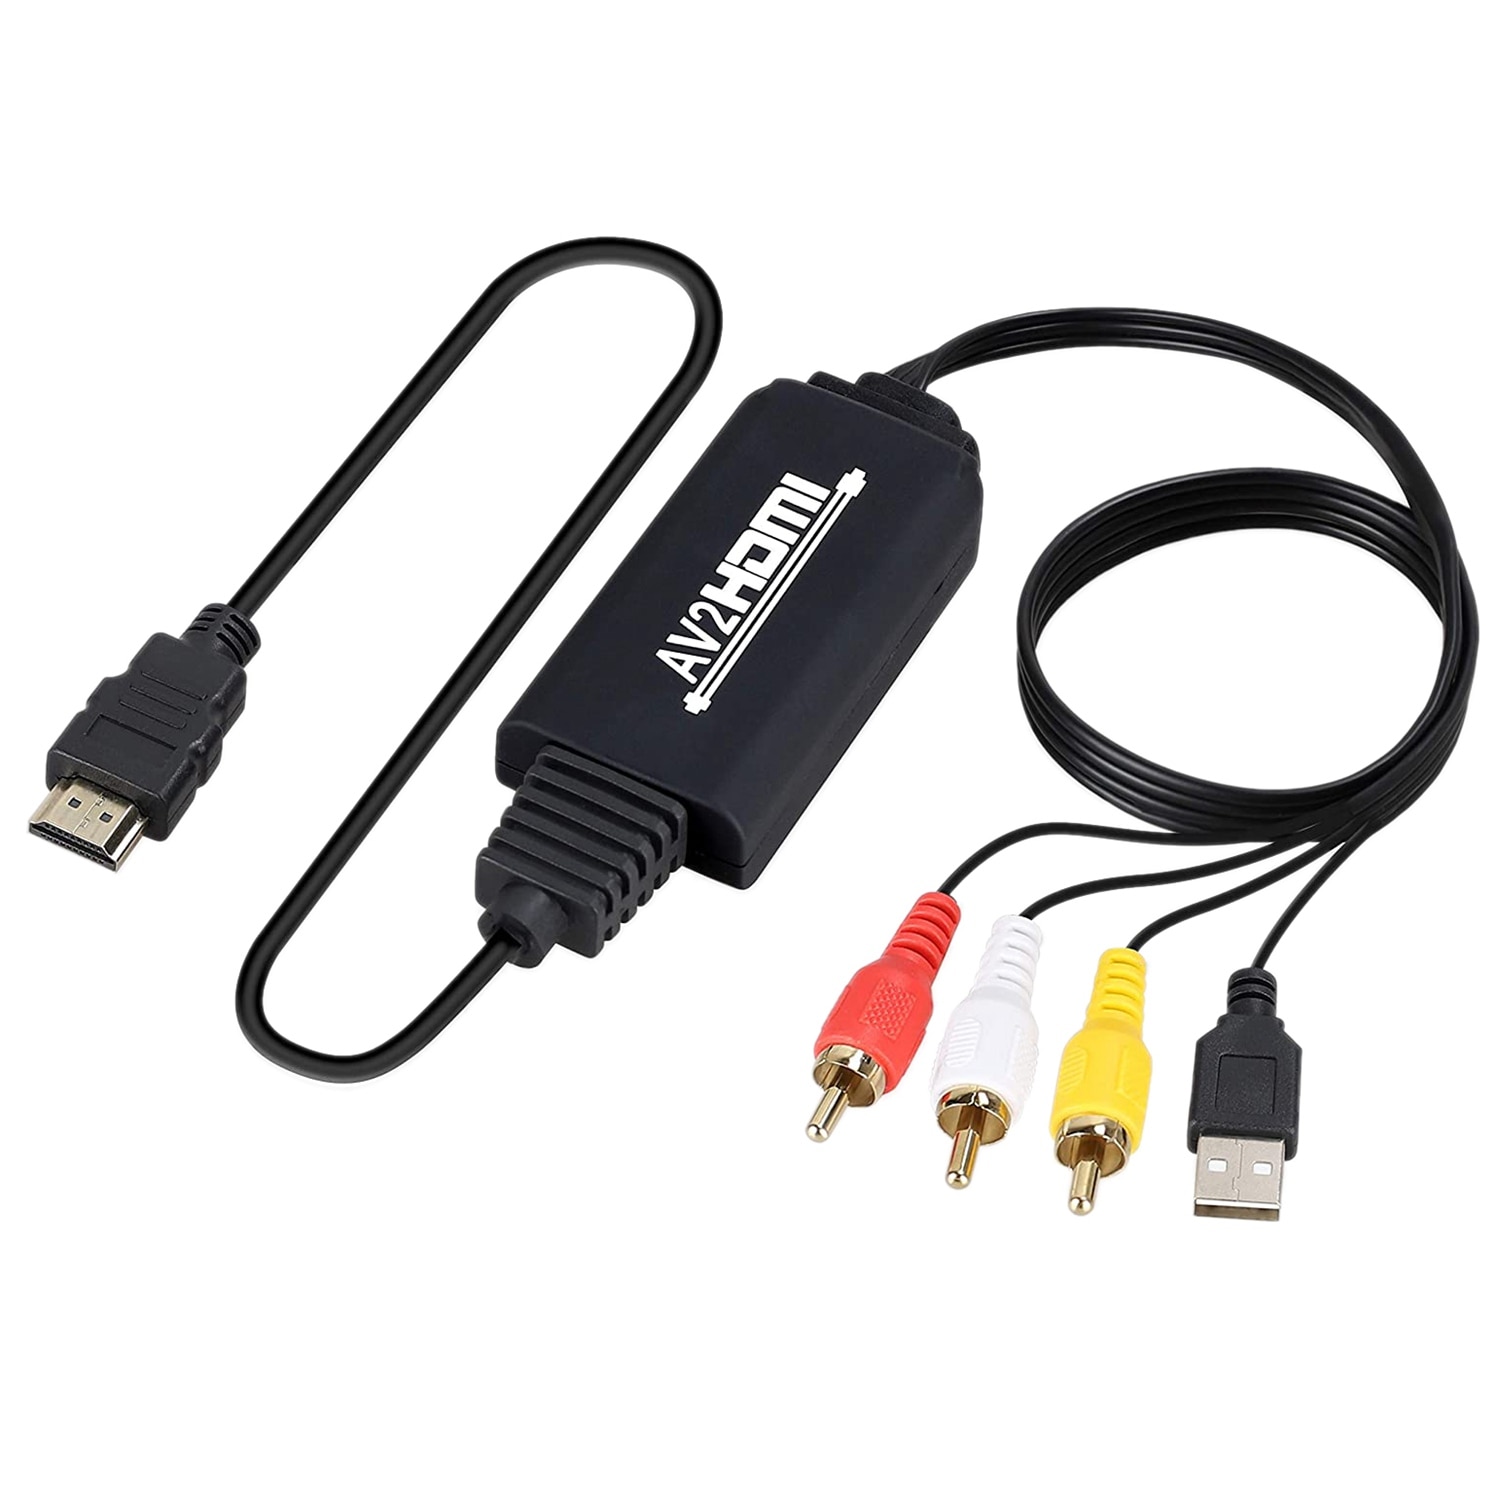 3RCA Composite AV vers HDMI Convertisseur Prise en Charge 1080P avec AV Câble et USB Câble pour PC/Xbox/PS4/PS3/TV/STB/VHS/DVD/Camera/Wii RCA vers HDMI Adaptateur Aluminium